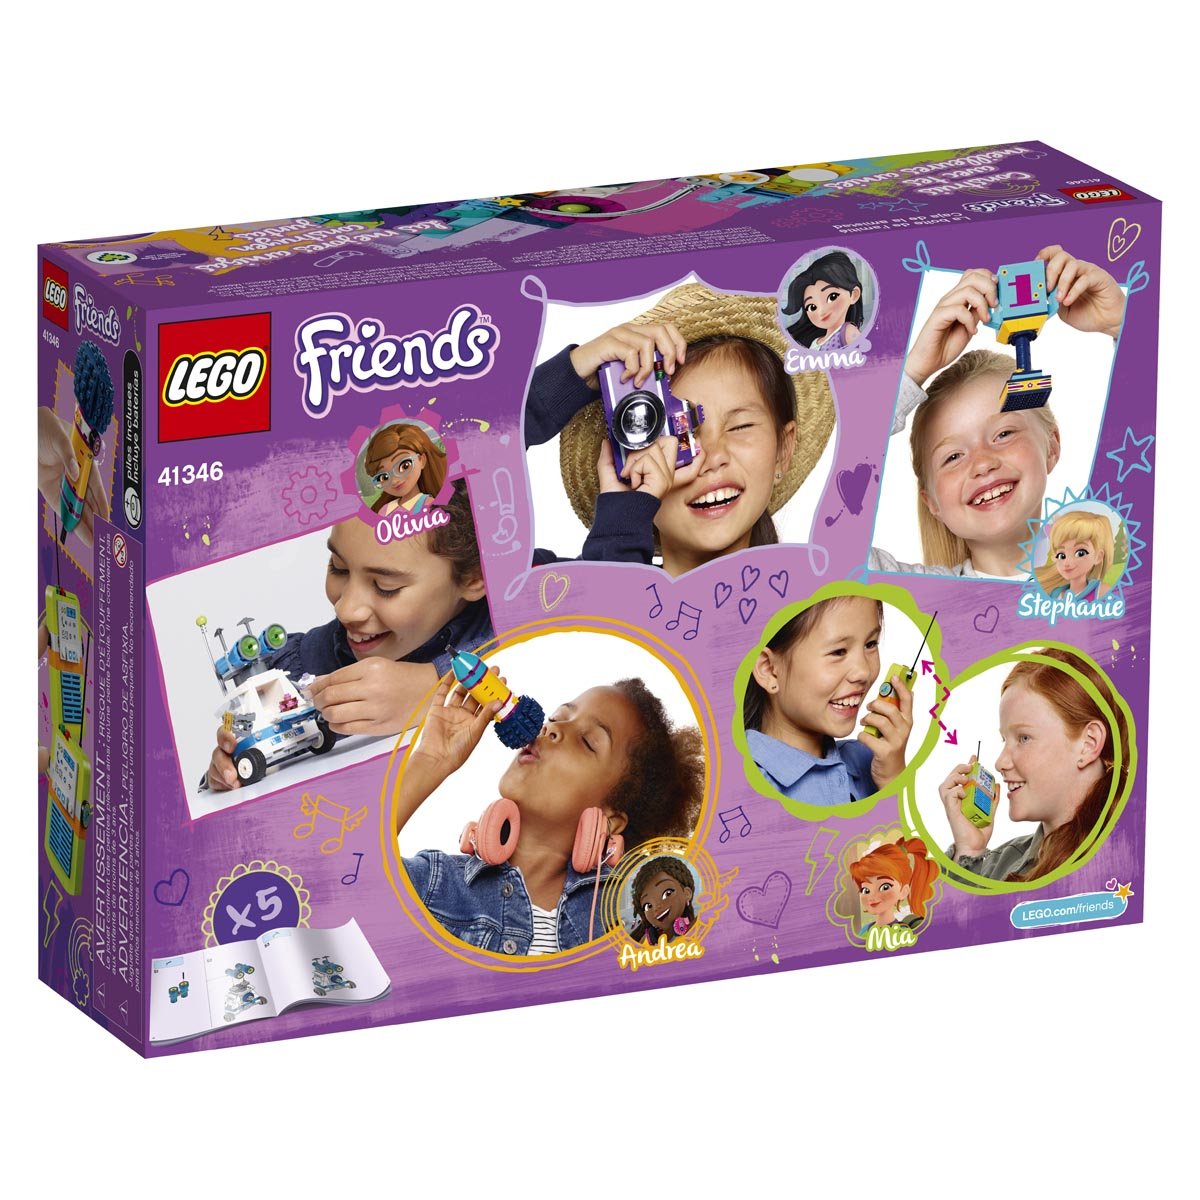 Friends Friendship Box Lego